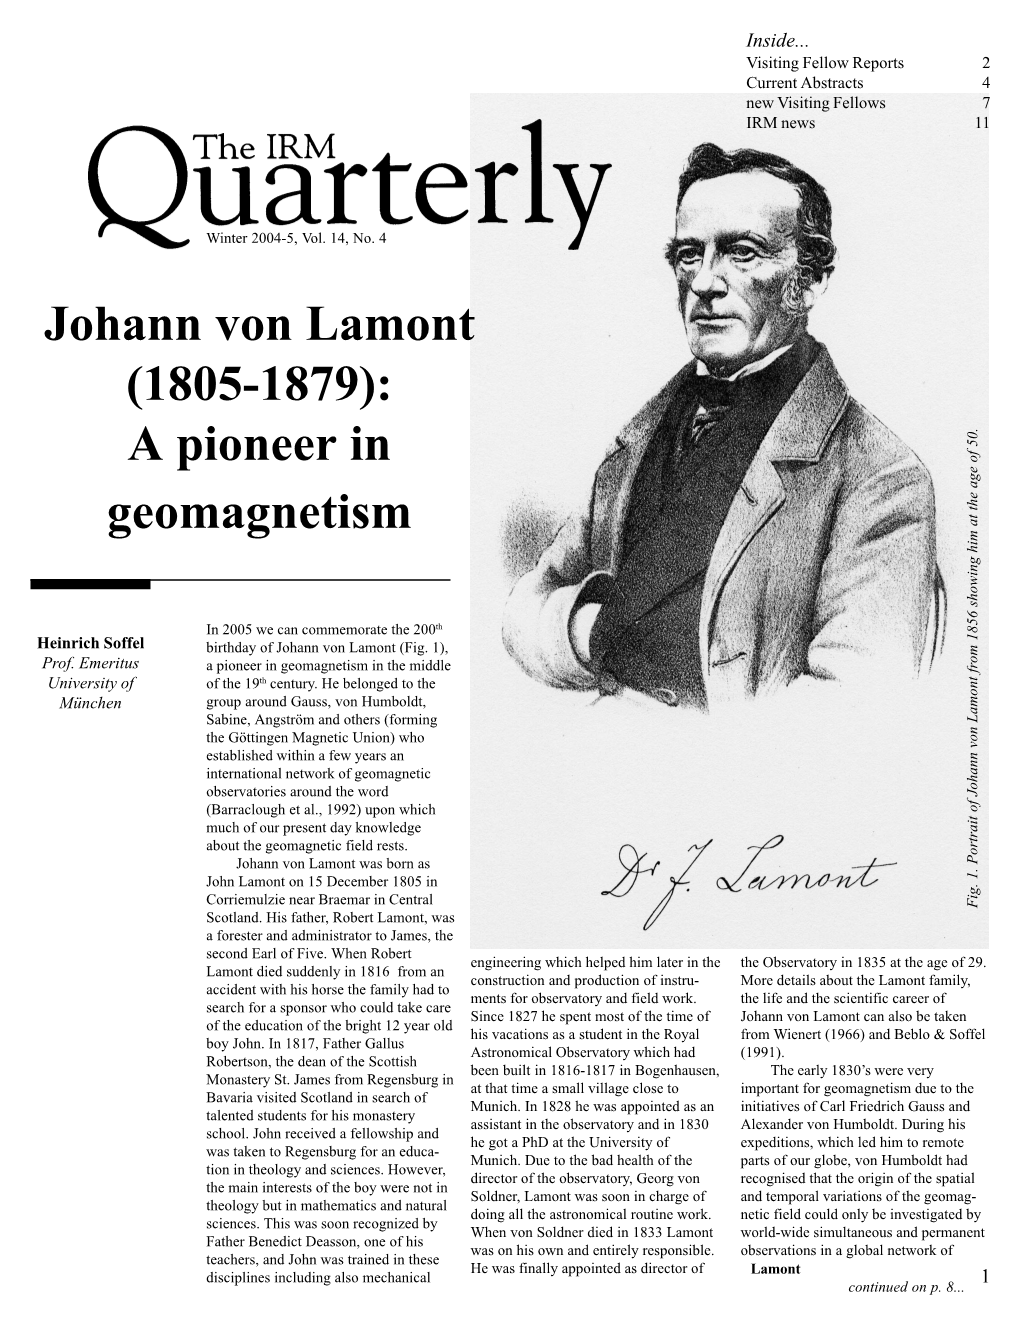 Johann Von Lamont (1805-1879): a Pioneer in Geomagnetism